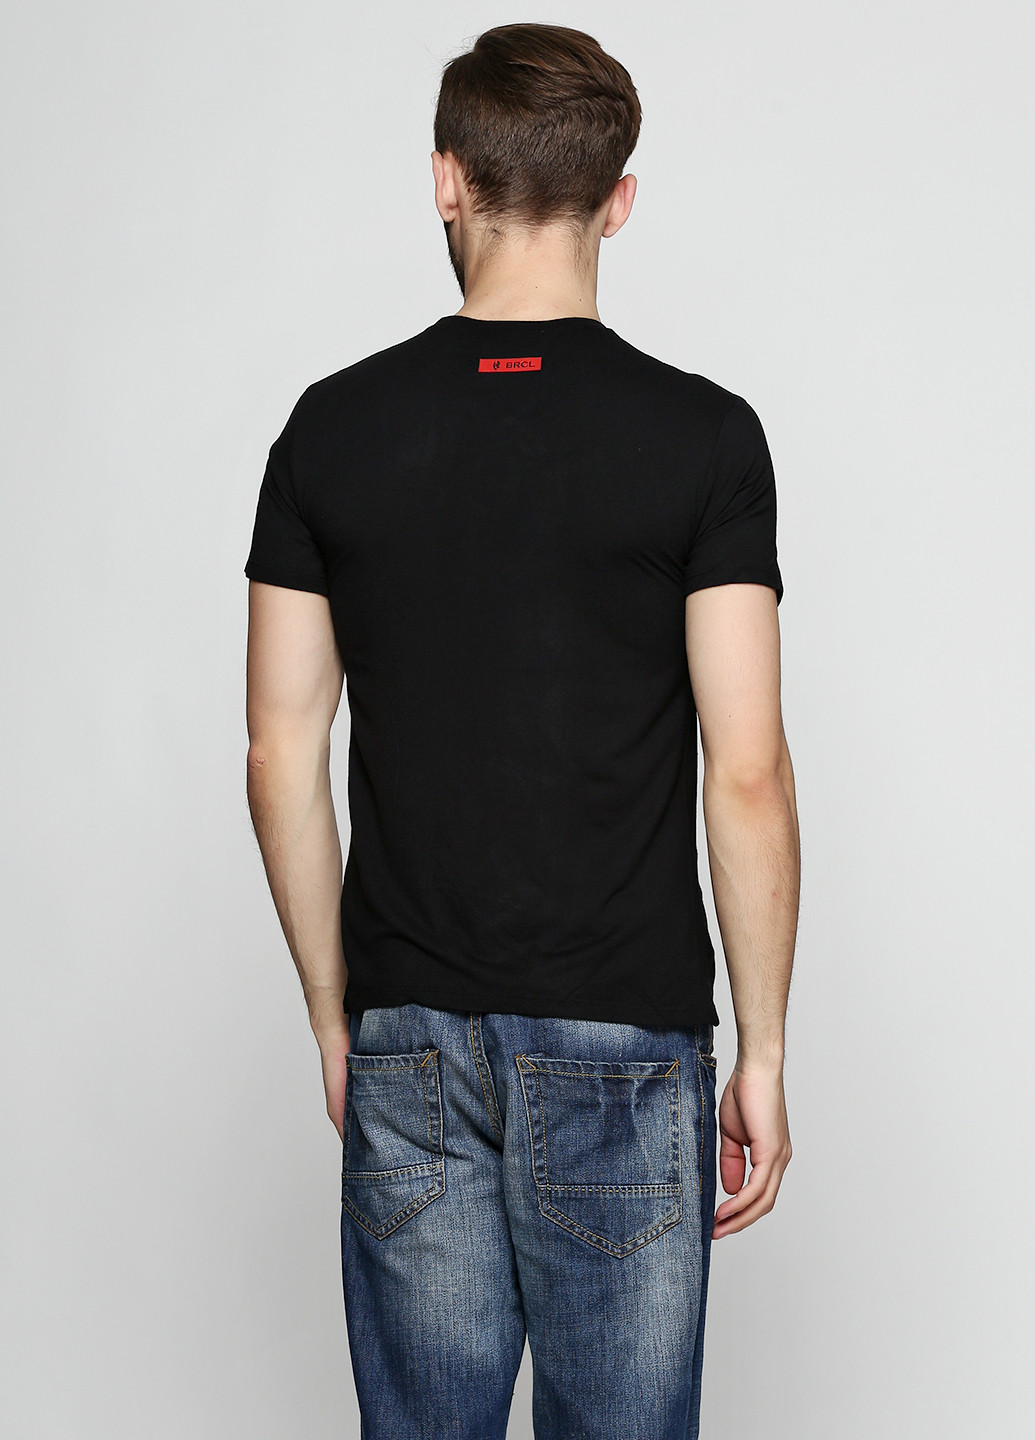 Черная демисезонная футболка с коротким рукавом Barocello